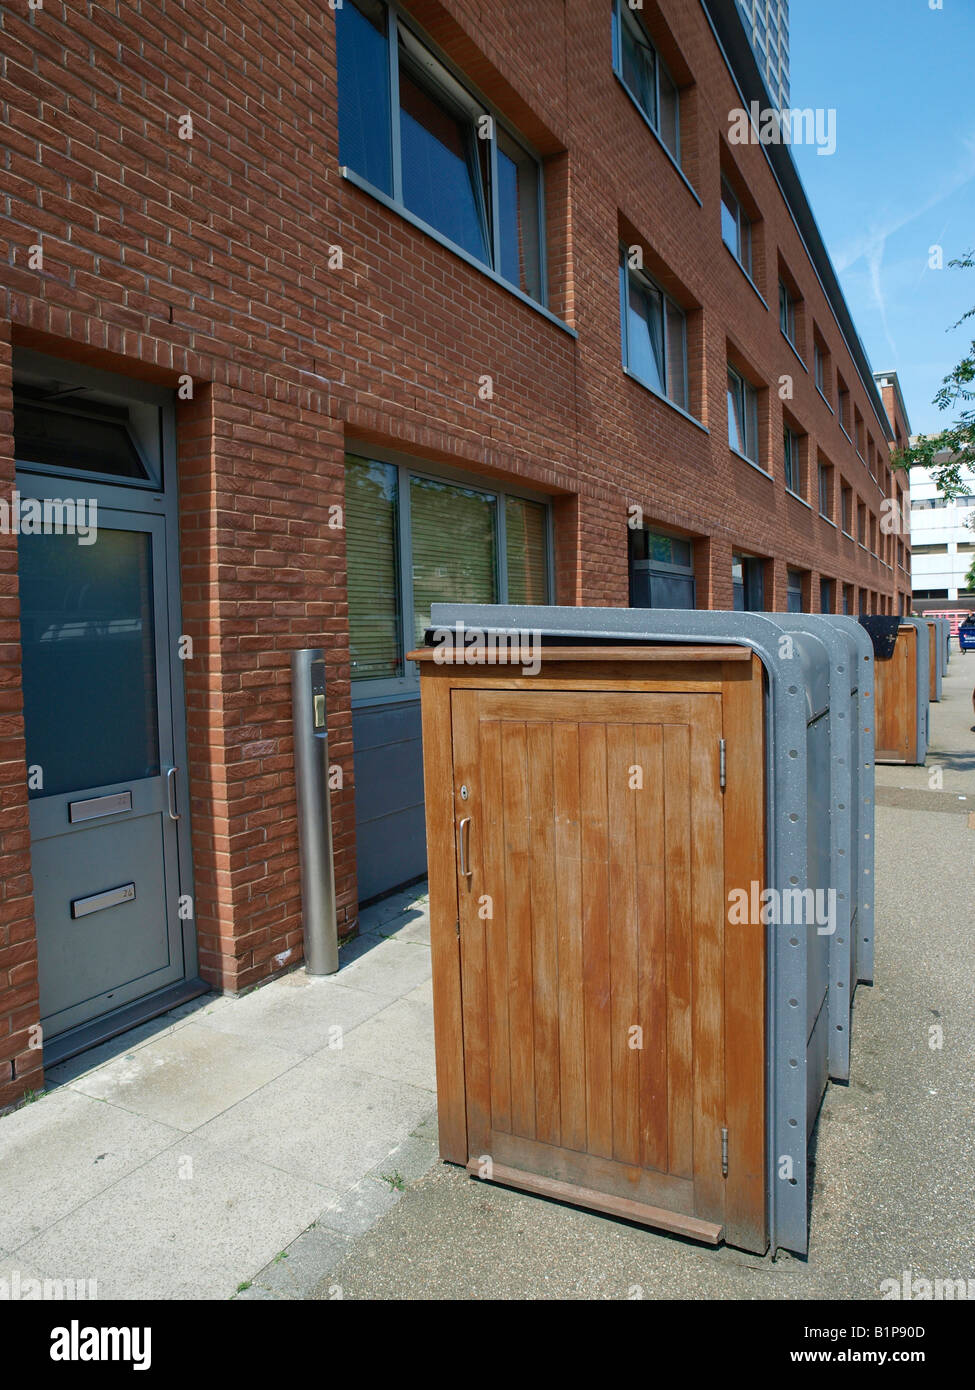 Bin enclosure in Coin Street London SE1 Coin Street housing co-operatives Stock Photo